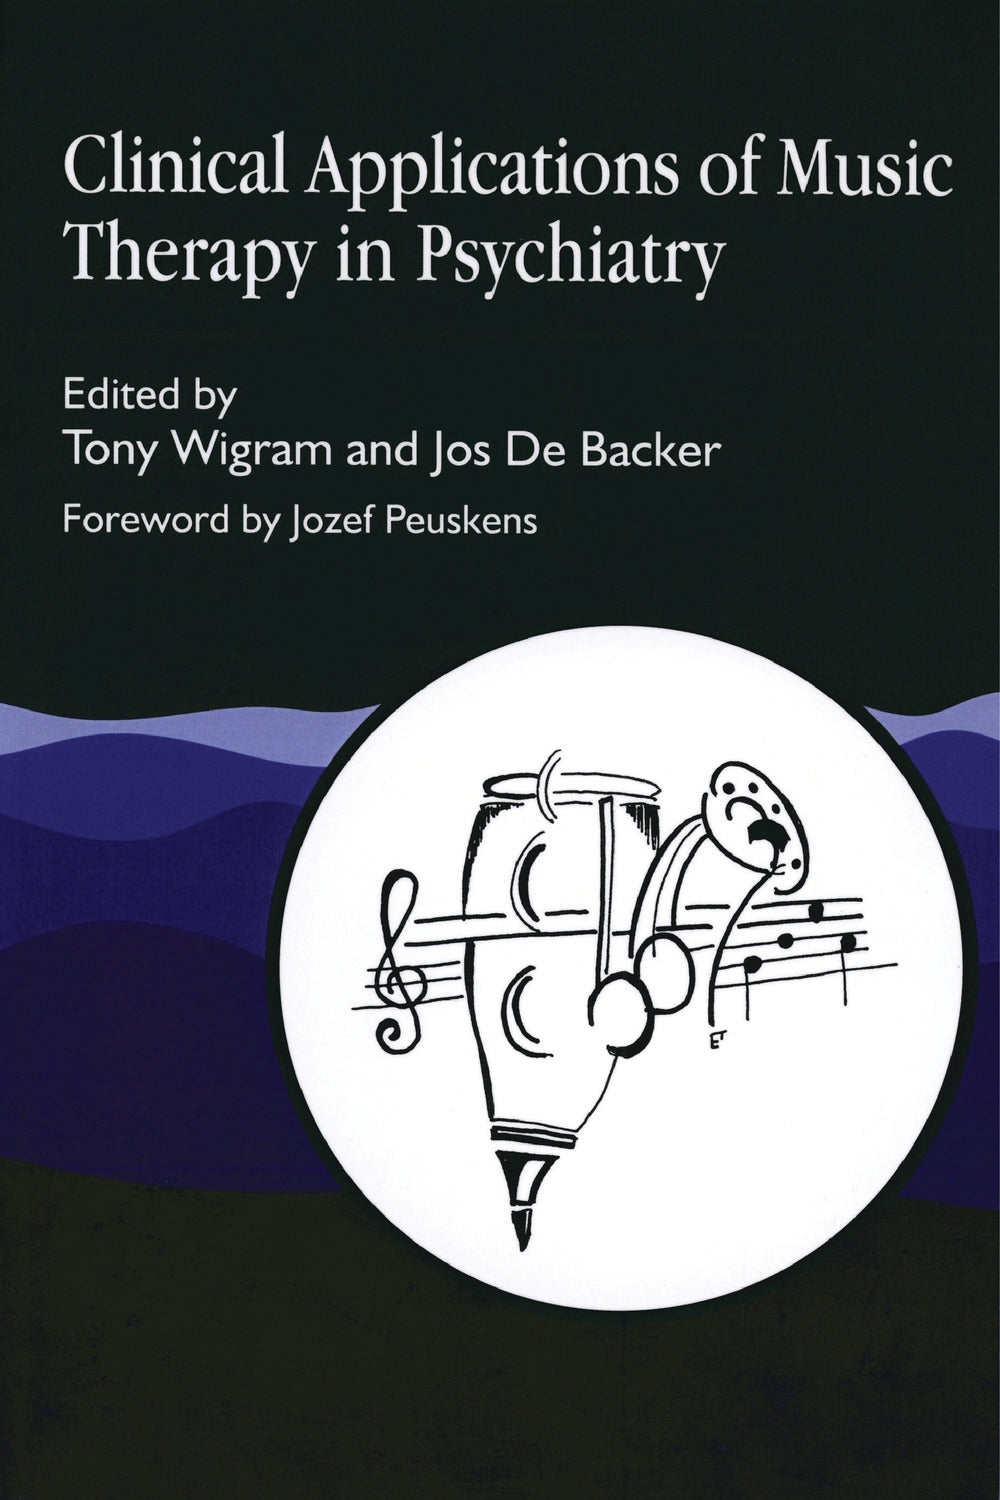 Clinical Applications of Music Therapy in Psychiatry by Tony Wigram, Jos De De Backer